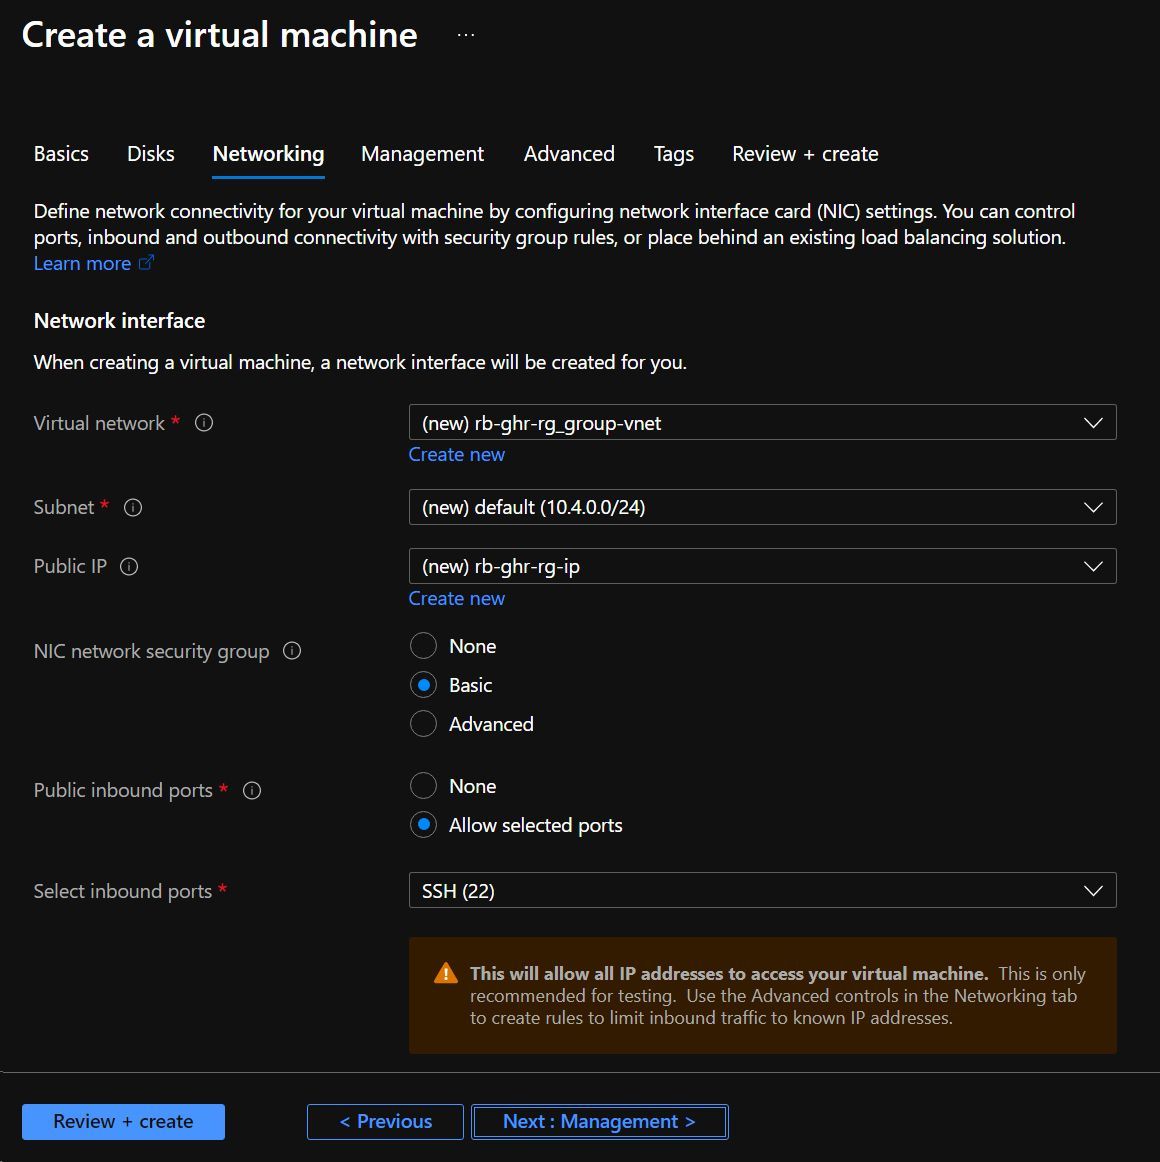 Screenshot showing the initial Virtual Machine creation blade in the Azure Portal